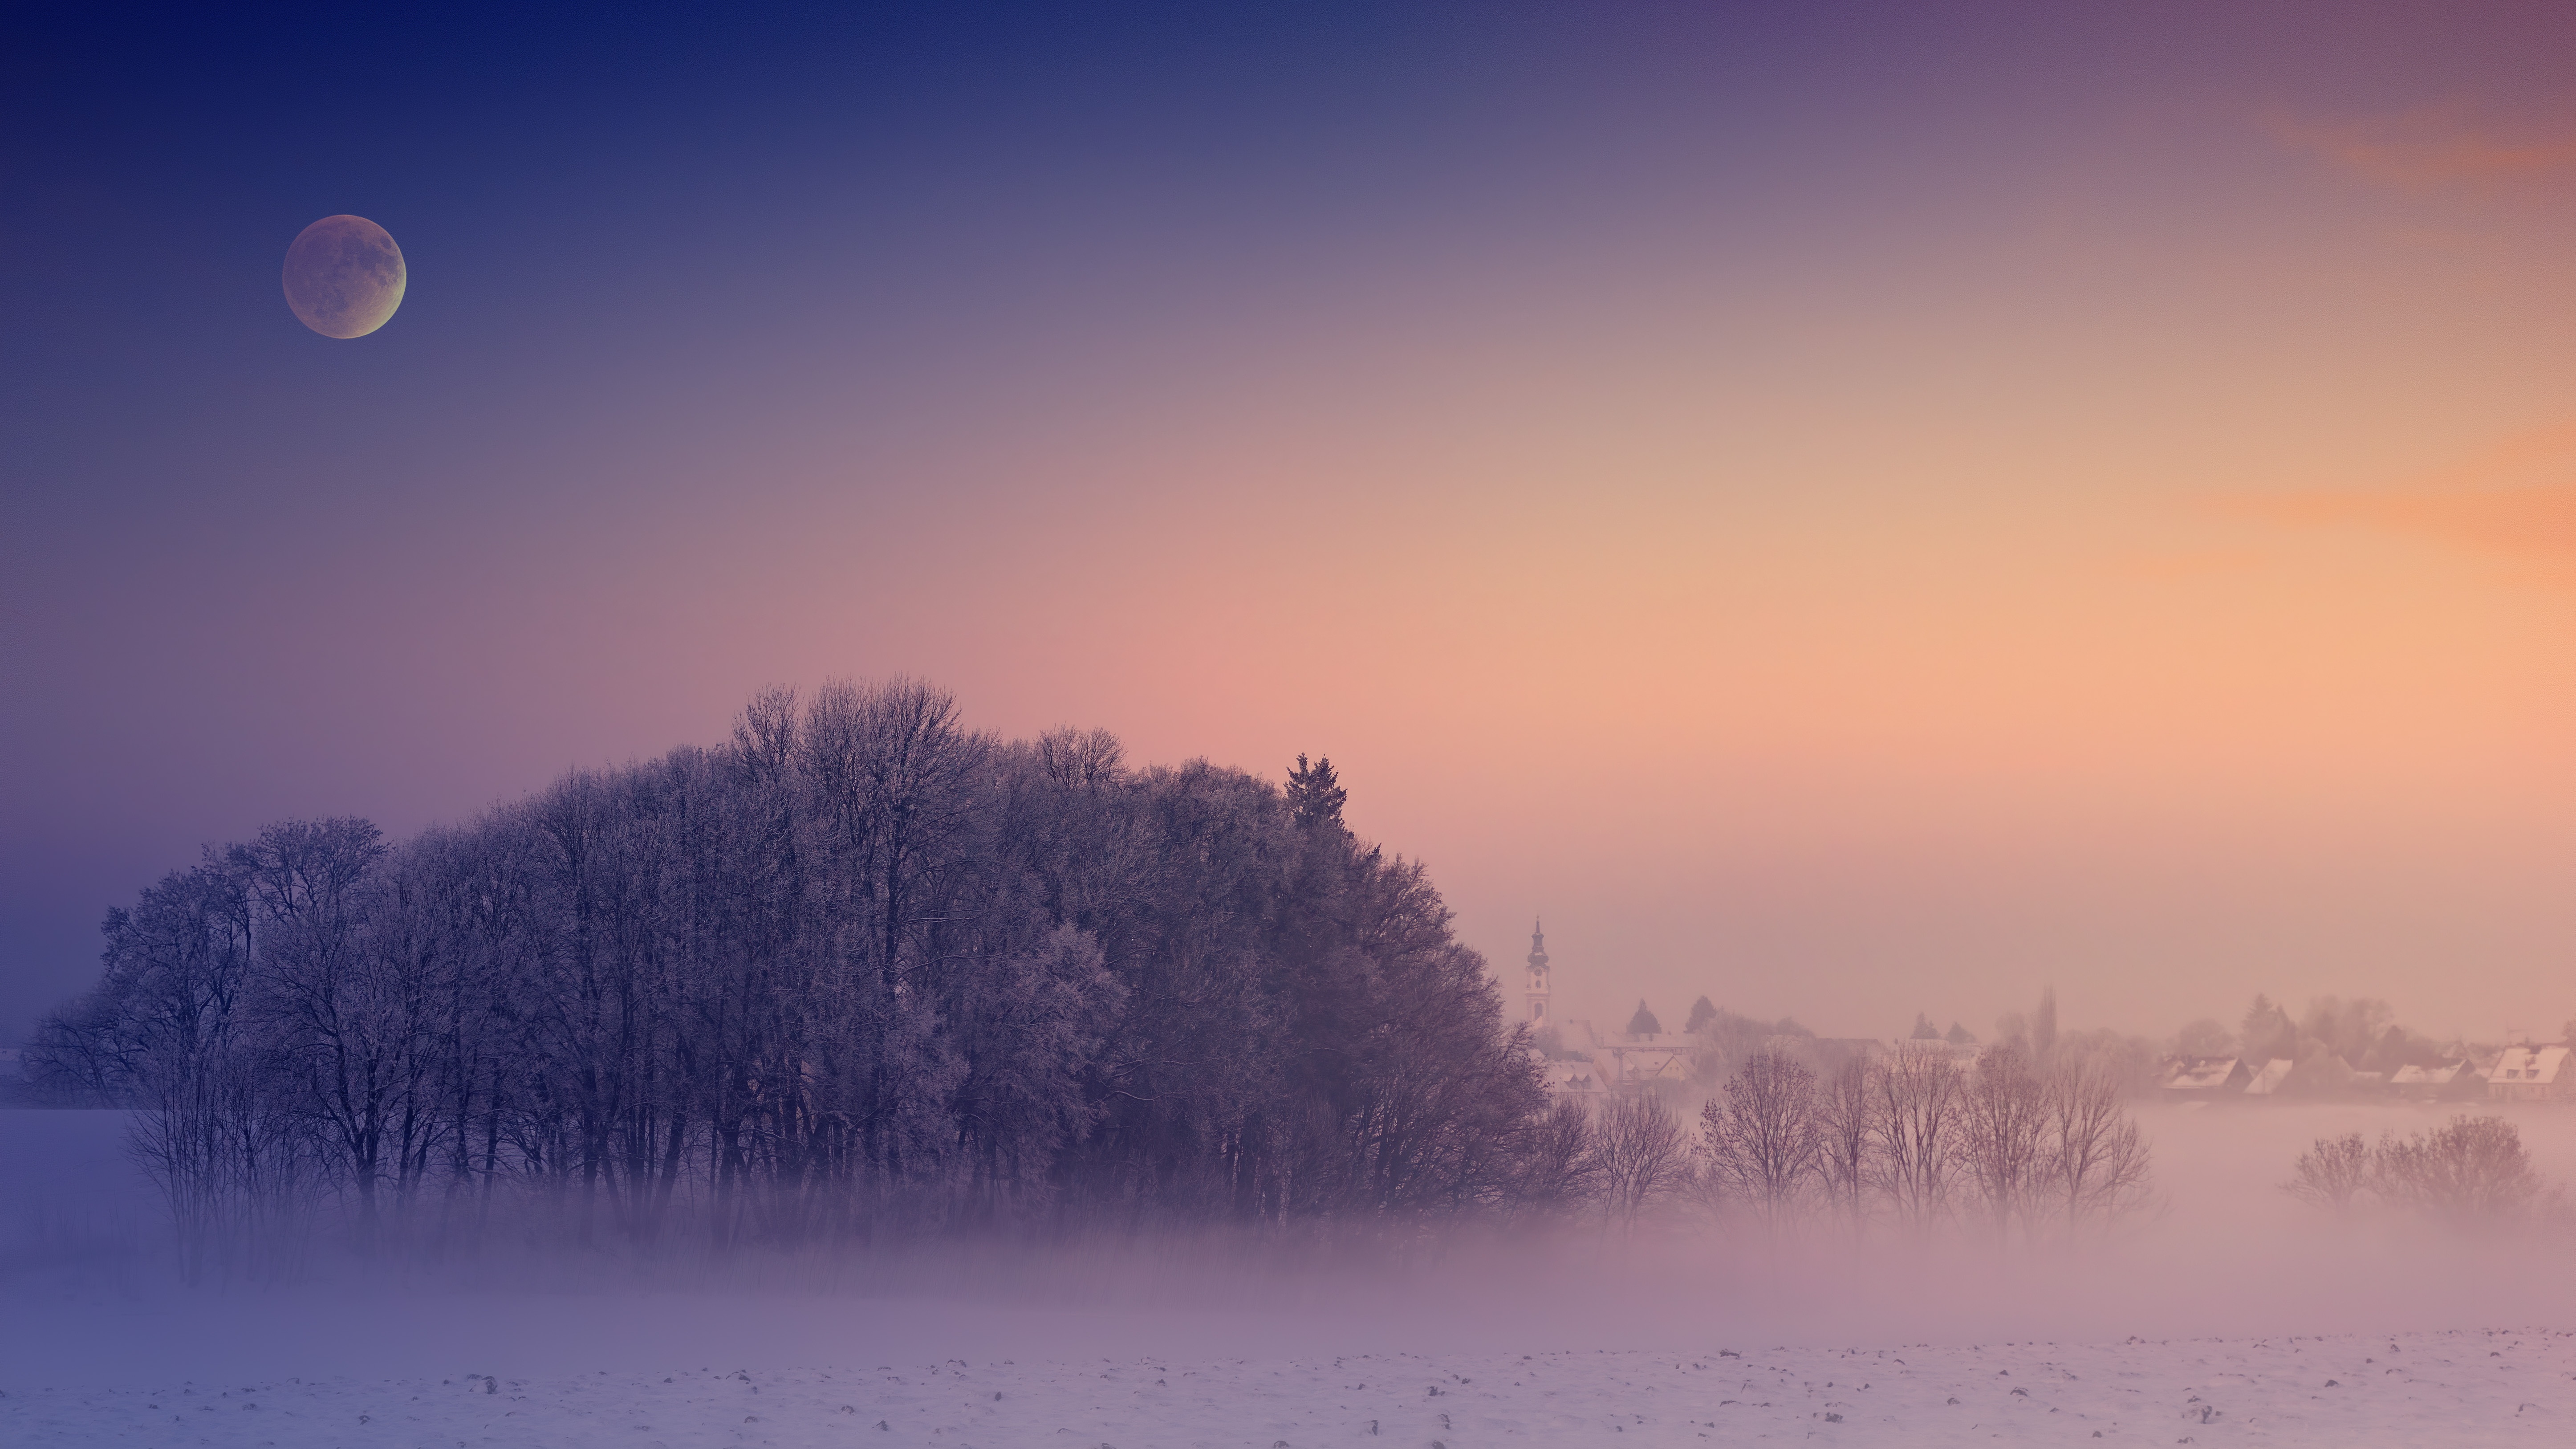 HD wallpaper, Winter, Moon, 5K, Foggy, Aesthetic, Cold, Morning, Landscape